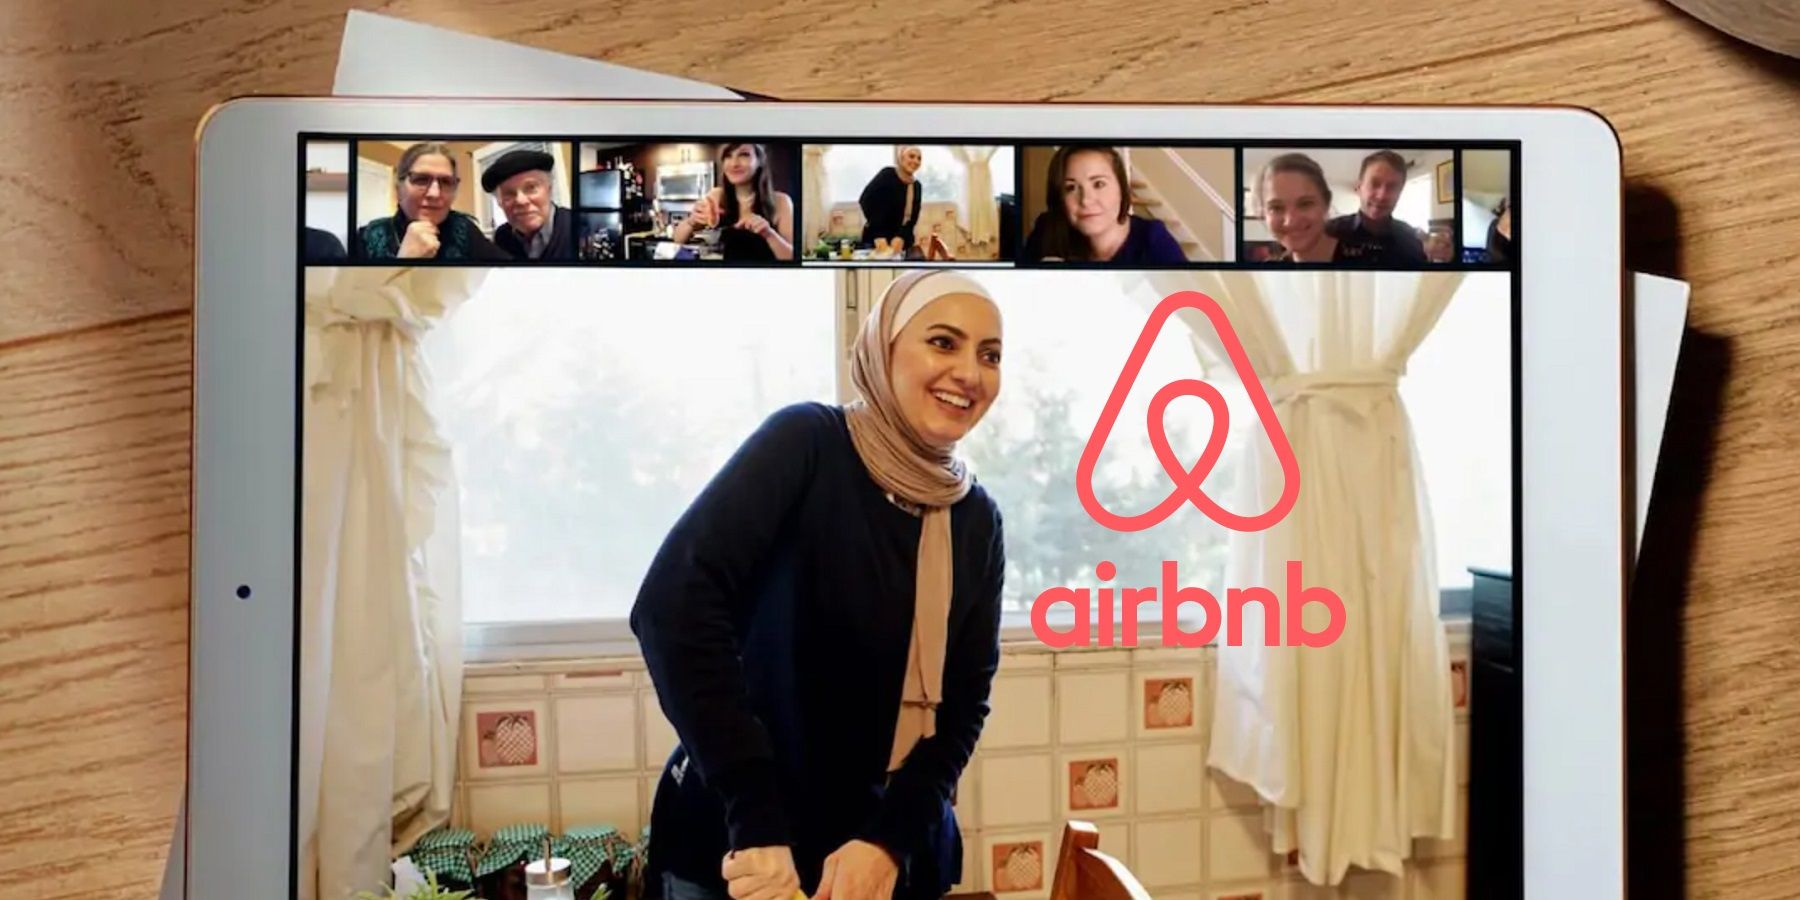 airbnb experiences virtual